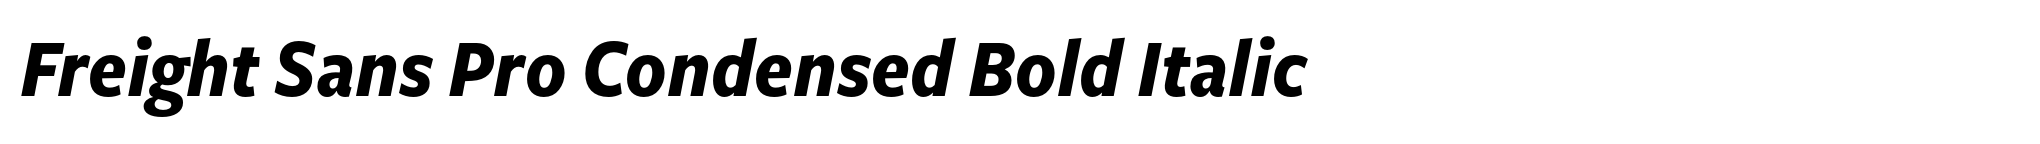 Freight Sans Pro Condensed Bold Italic image